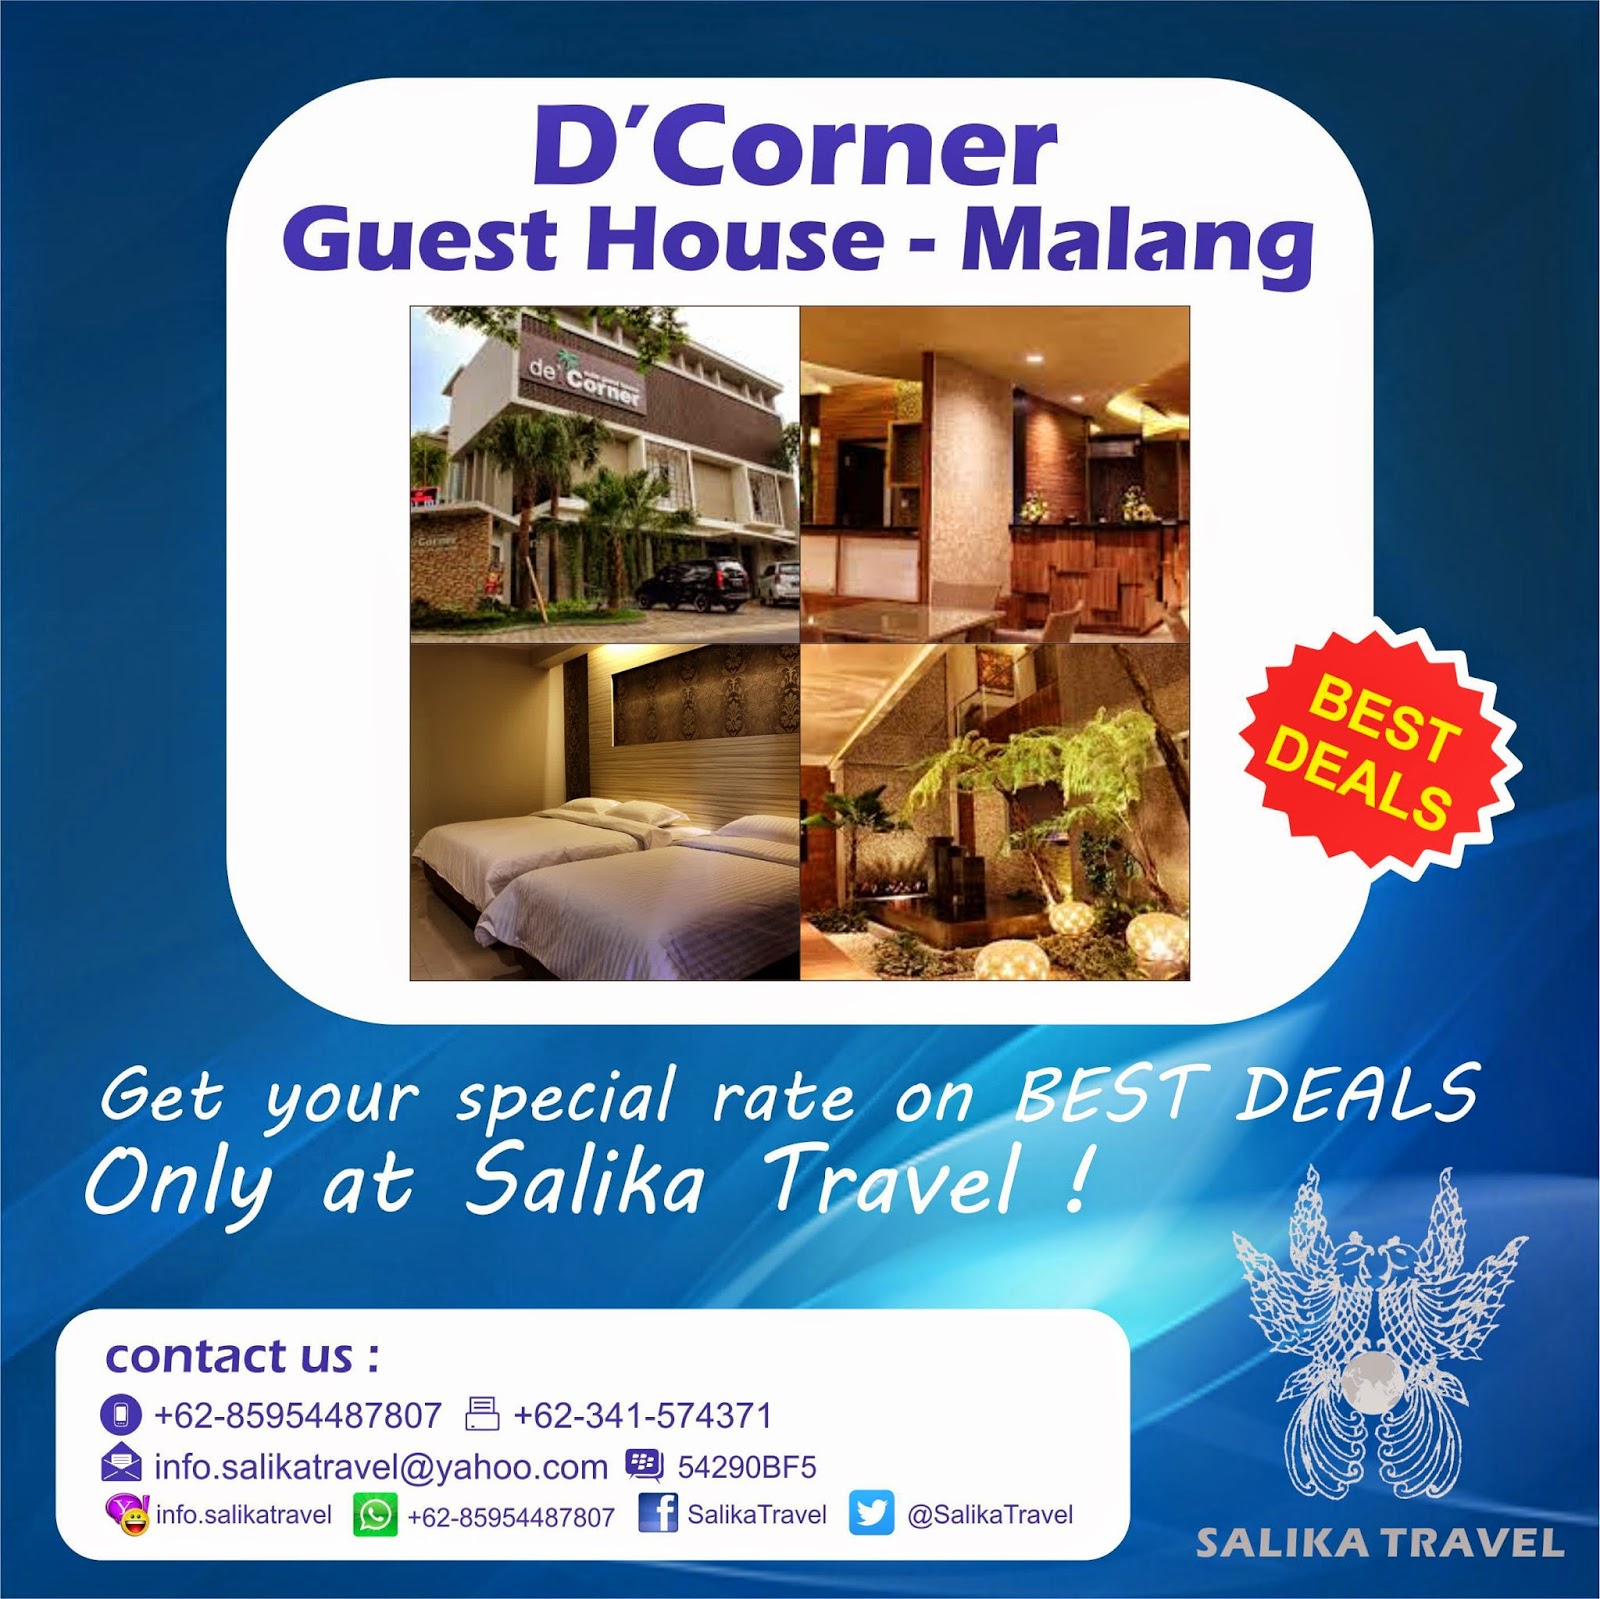 D'Corner Guest House Malang - Salika Travel